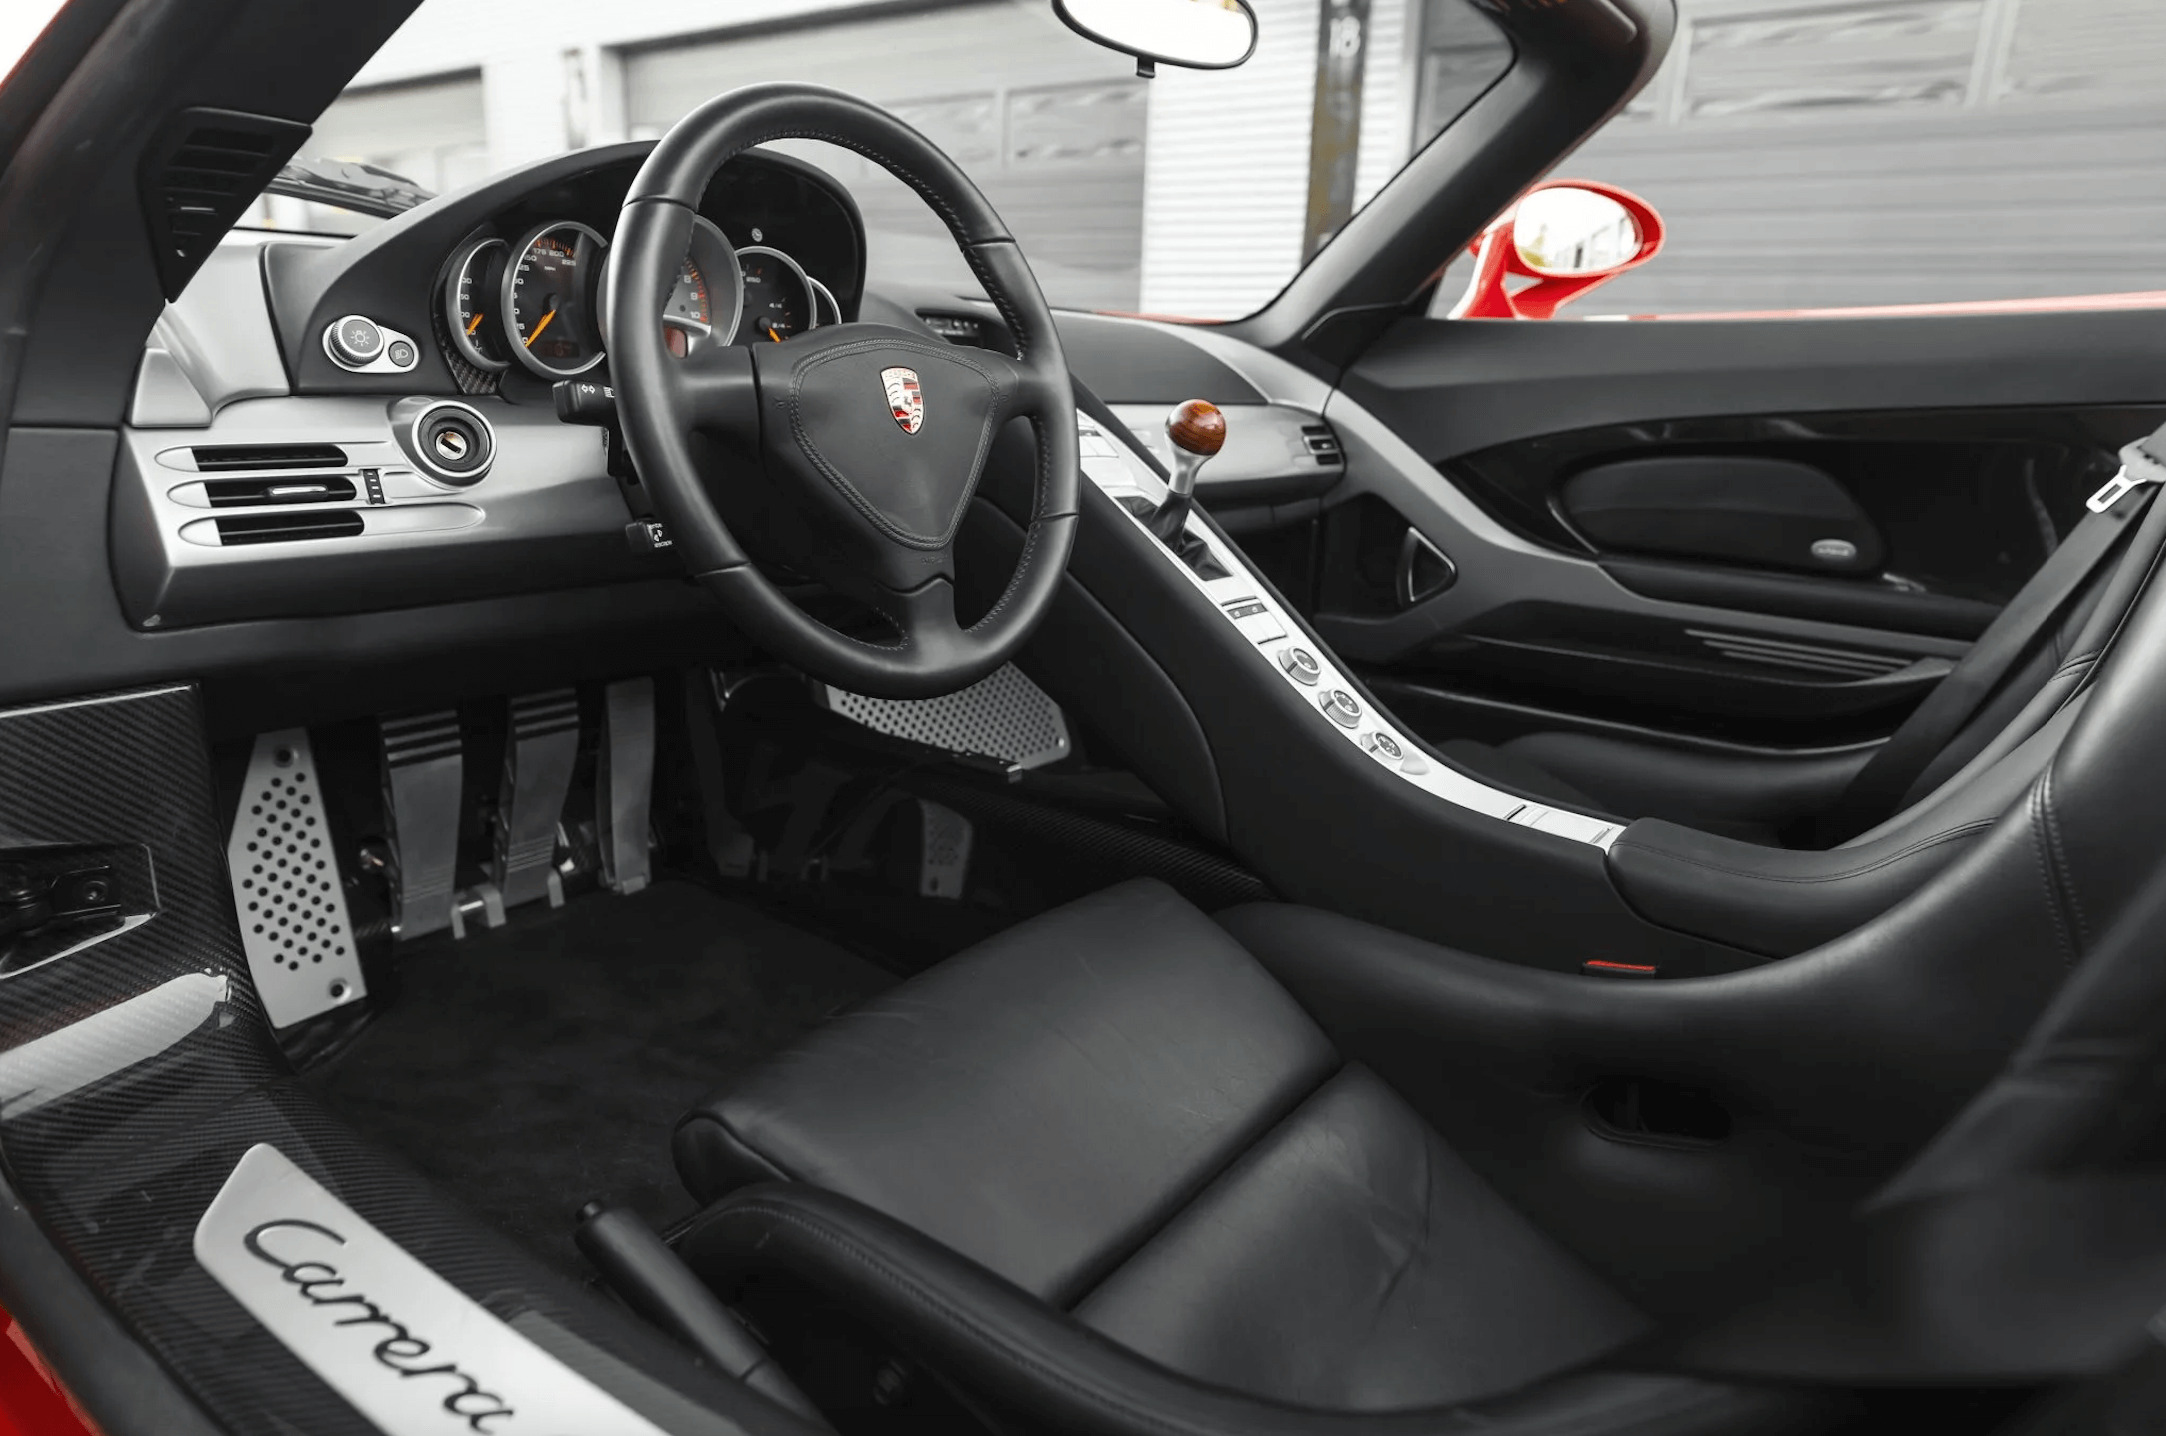 Porsche Carrera GT interior